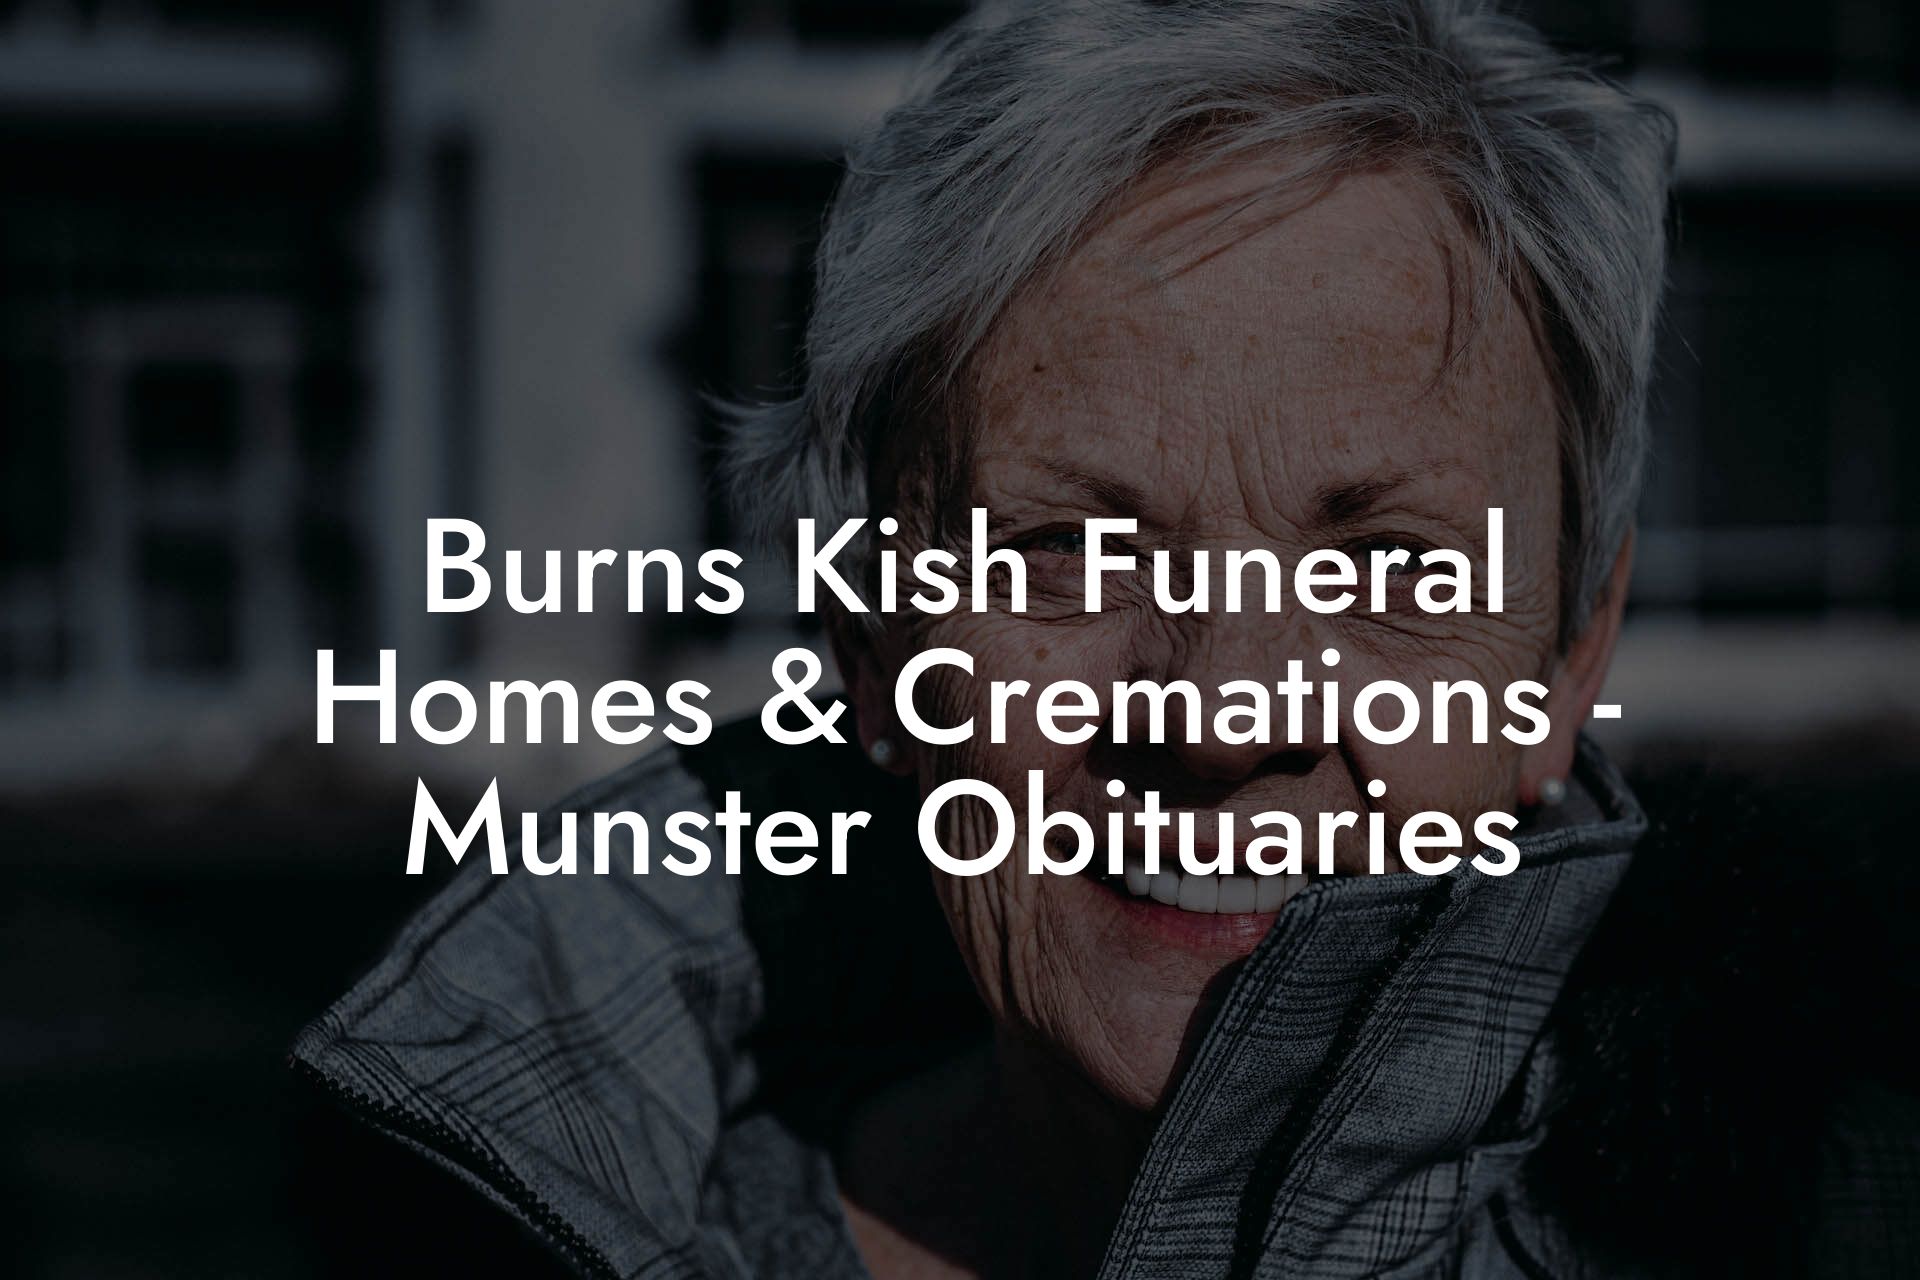 Burns Kish Funeral Homes & Cremations - Munster Obituaries